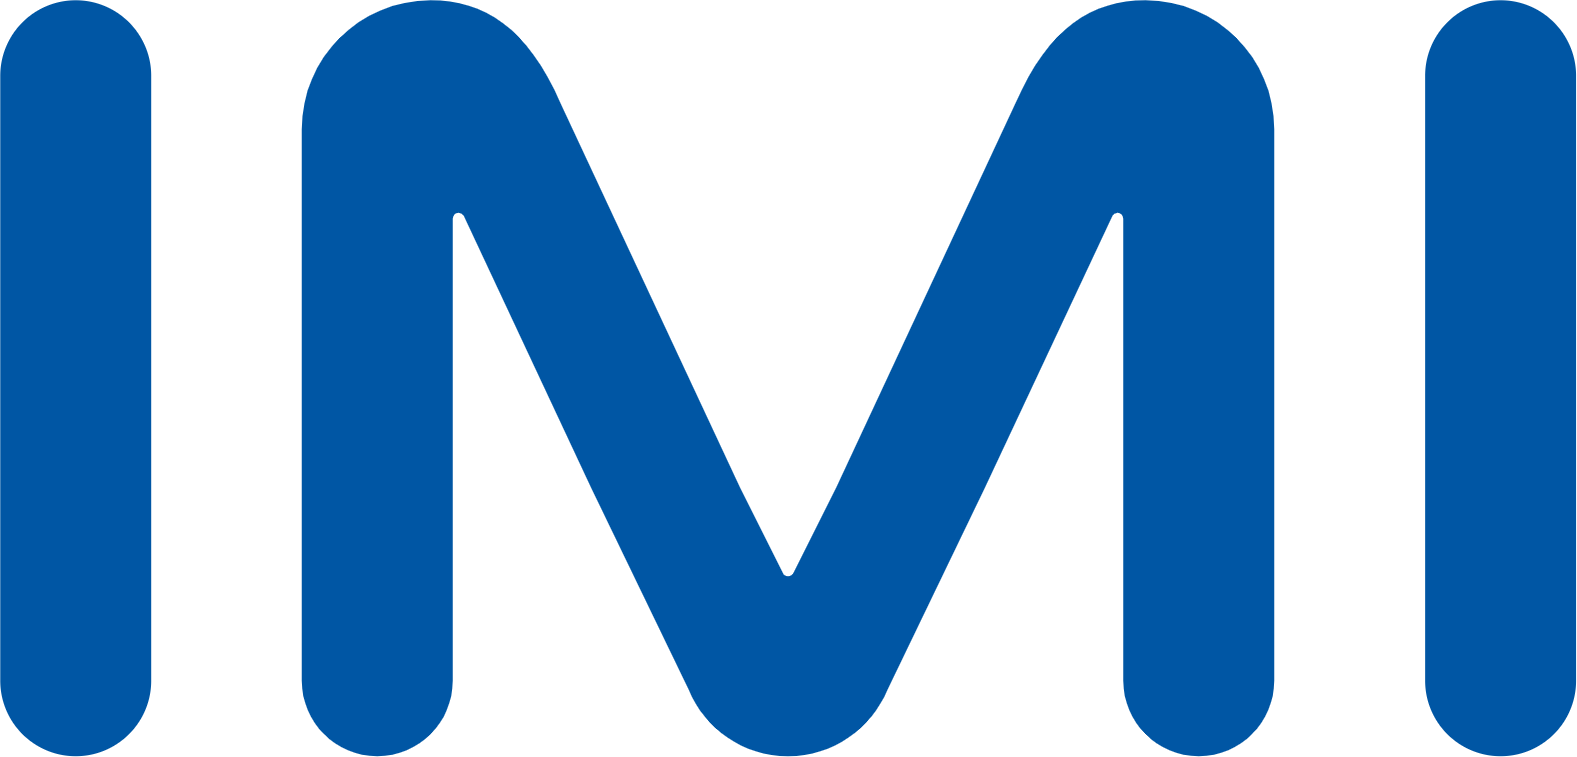 IMI plc logo (PNG transparent)